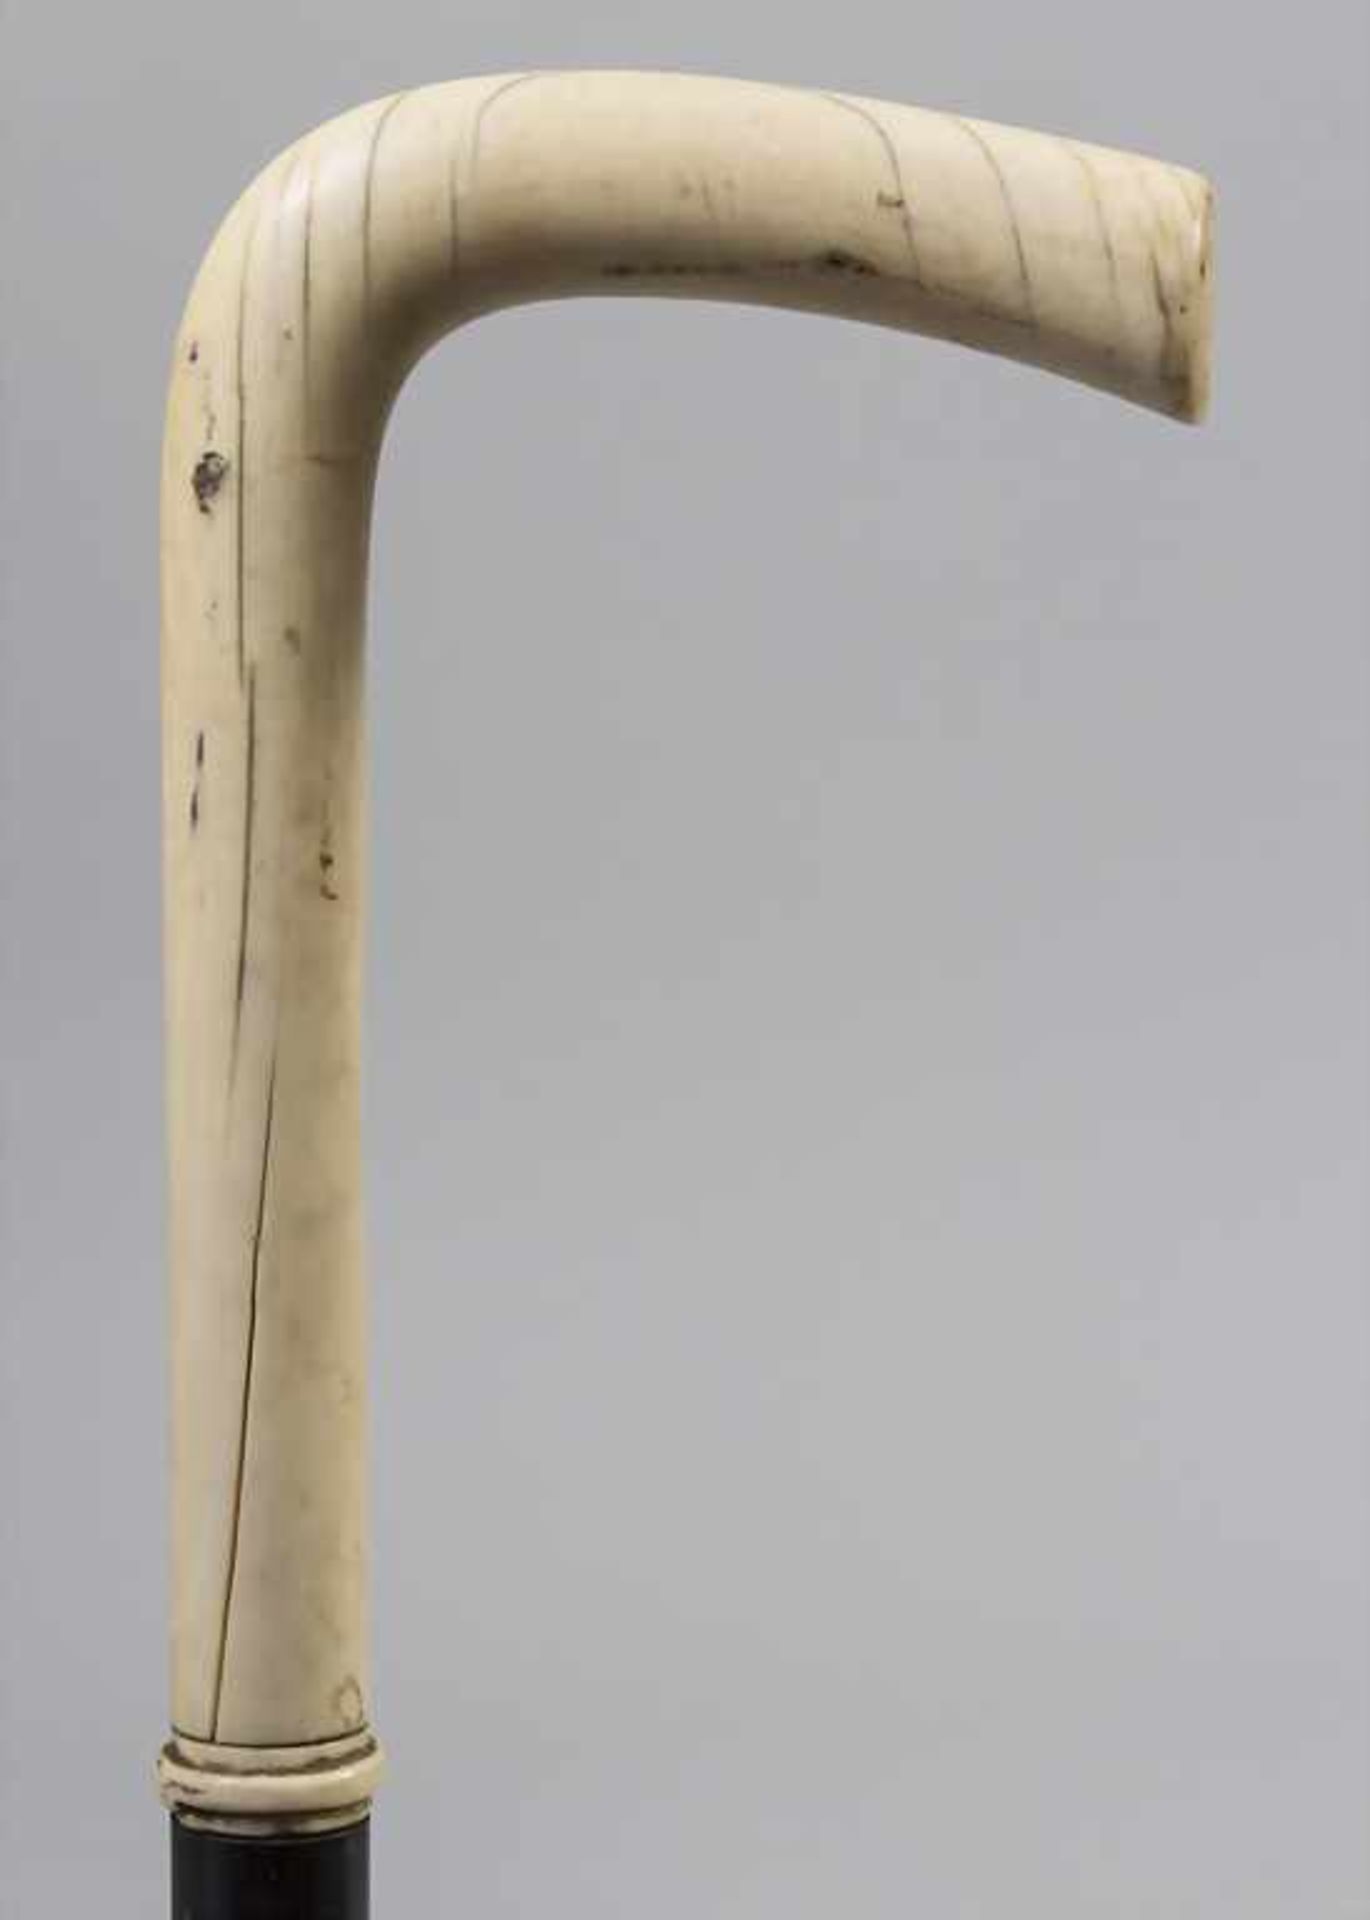 Sammlung 10 Gehstöcke / A collection of 10 canes with ivory handle - Bild 15 aus 27